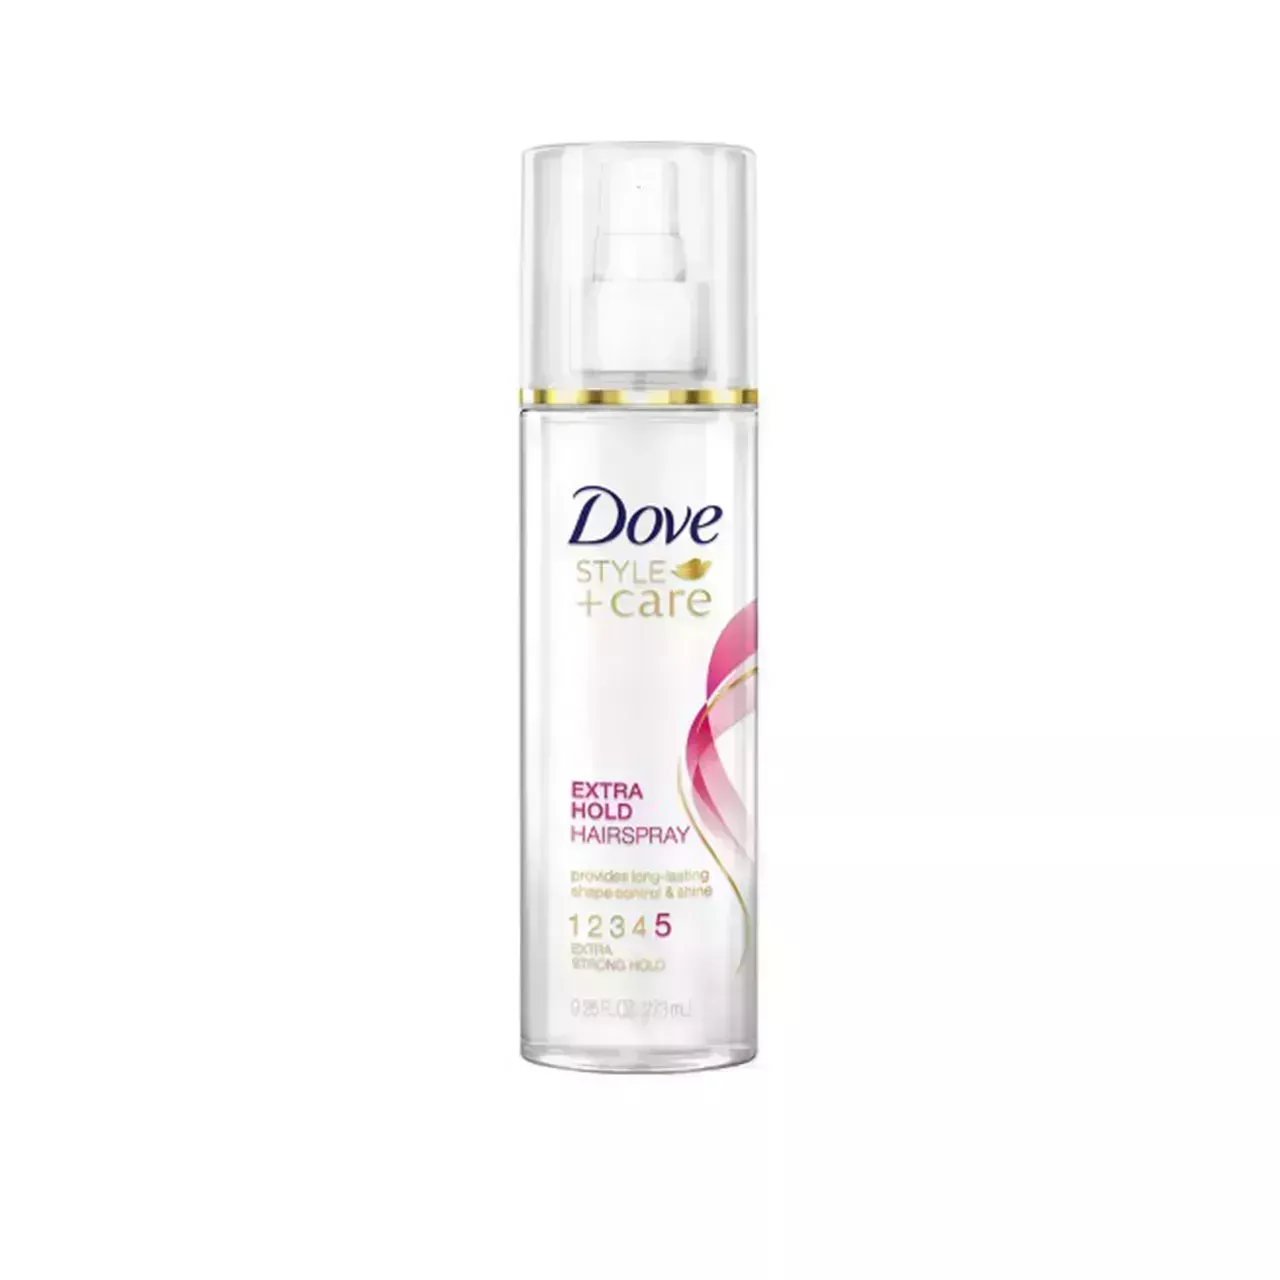 Dove Extra Hold Hairspray on white background